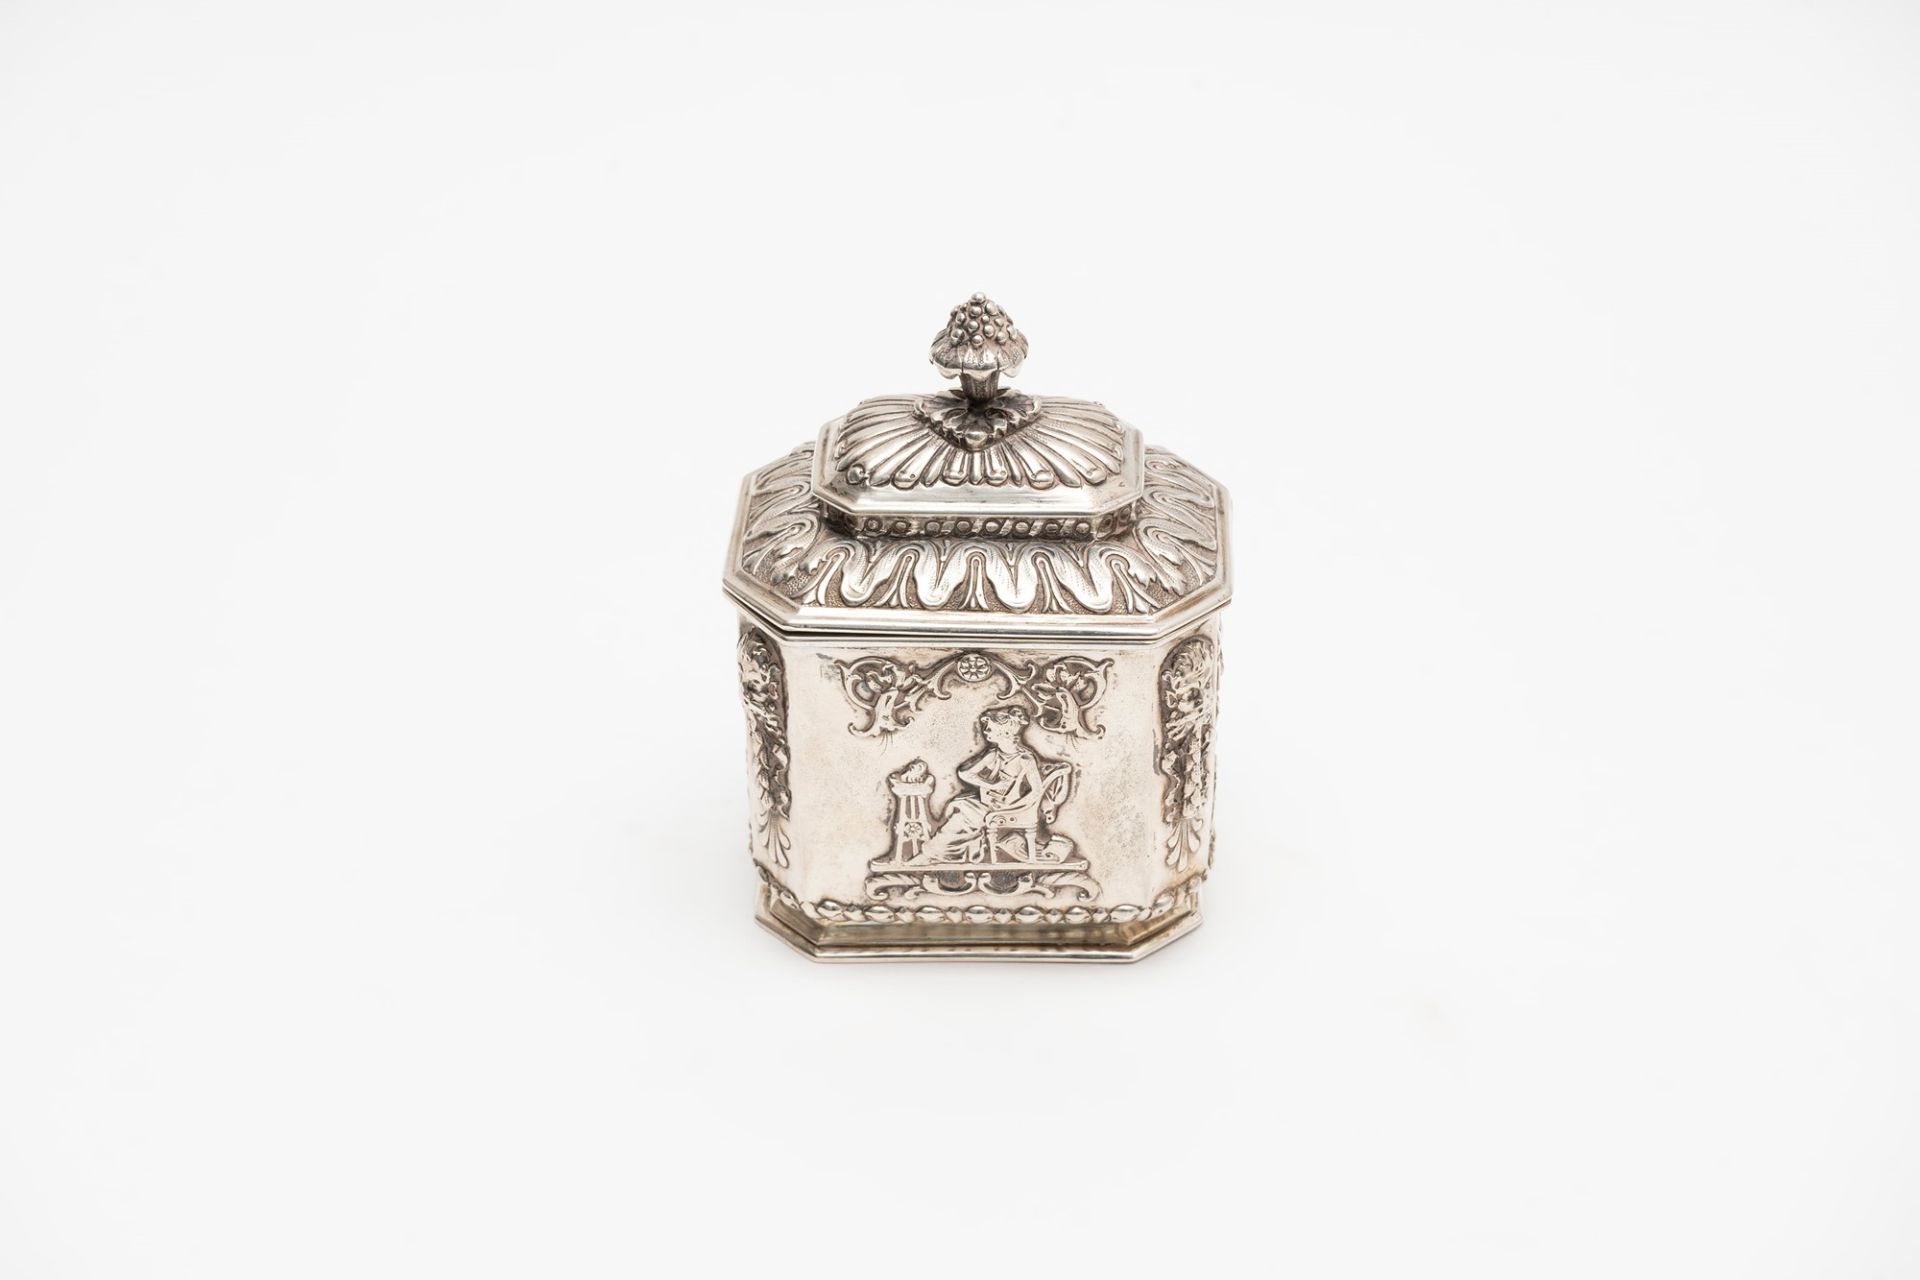 Small silver tea box, Germany, late 19th century - early 20th century - Bild 2 aus 2